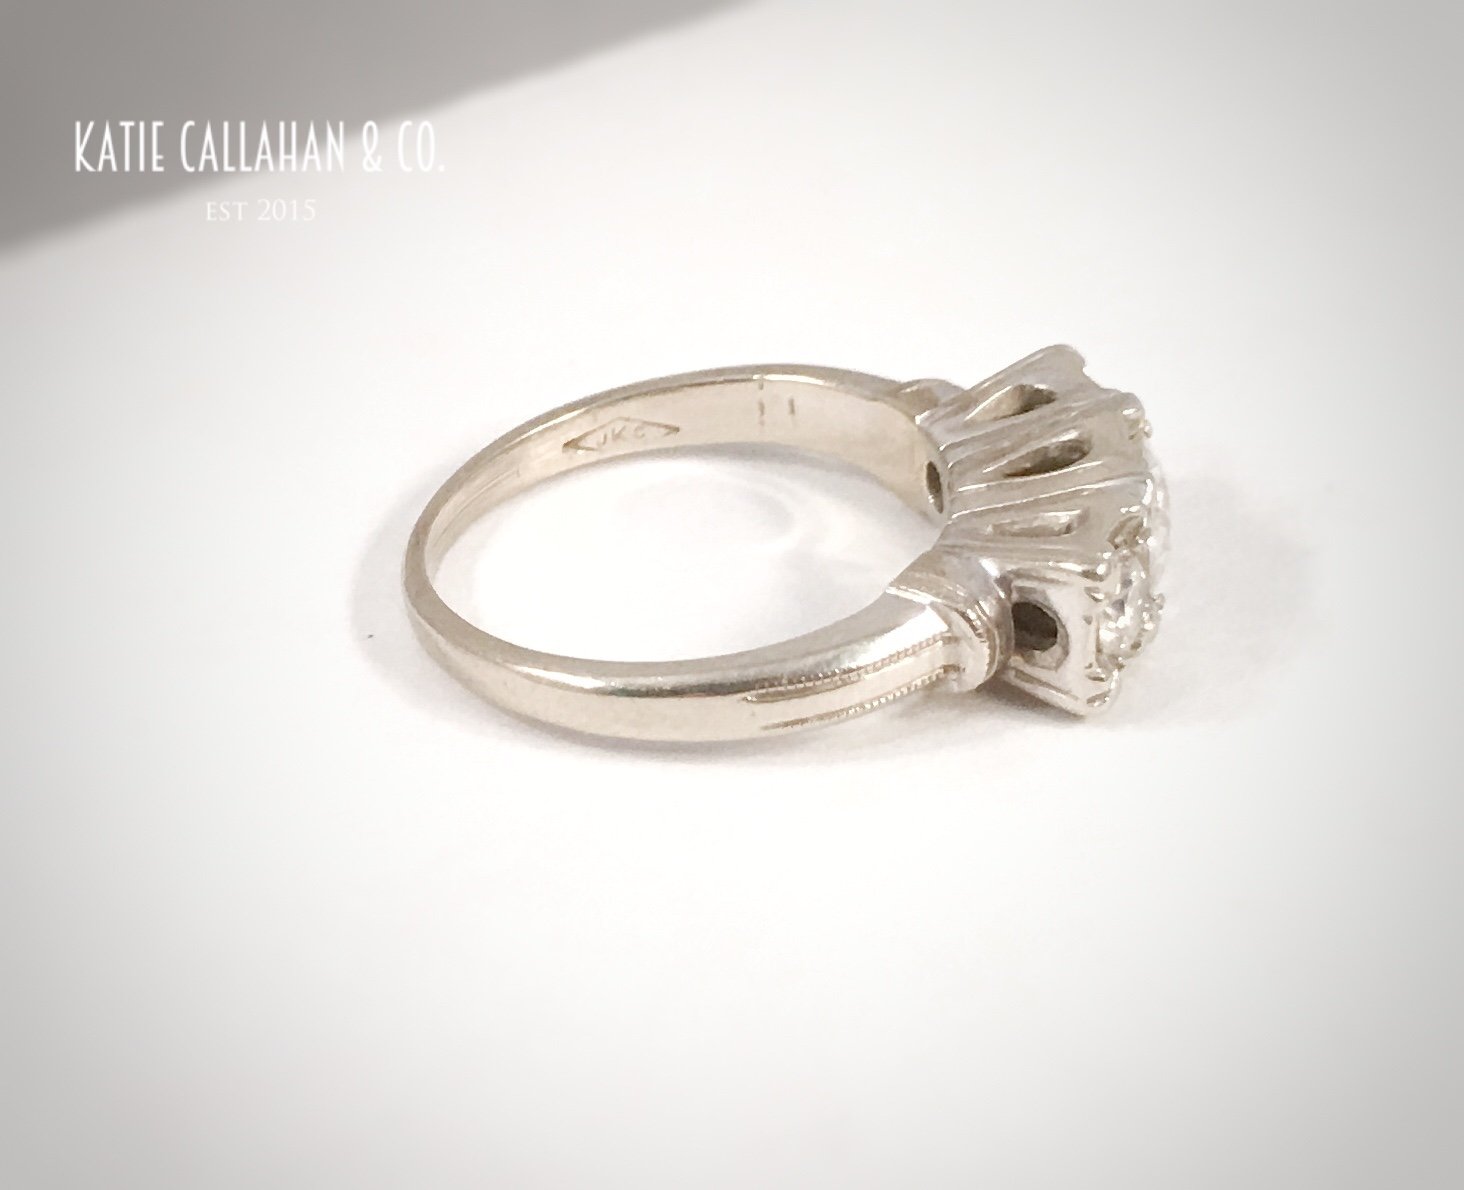 Art Deco 14kt White Gold Three Stone Diamond Engagement Ring